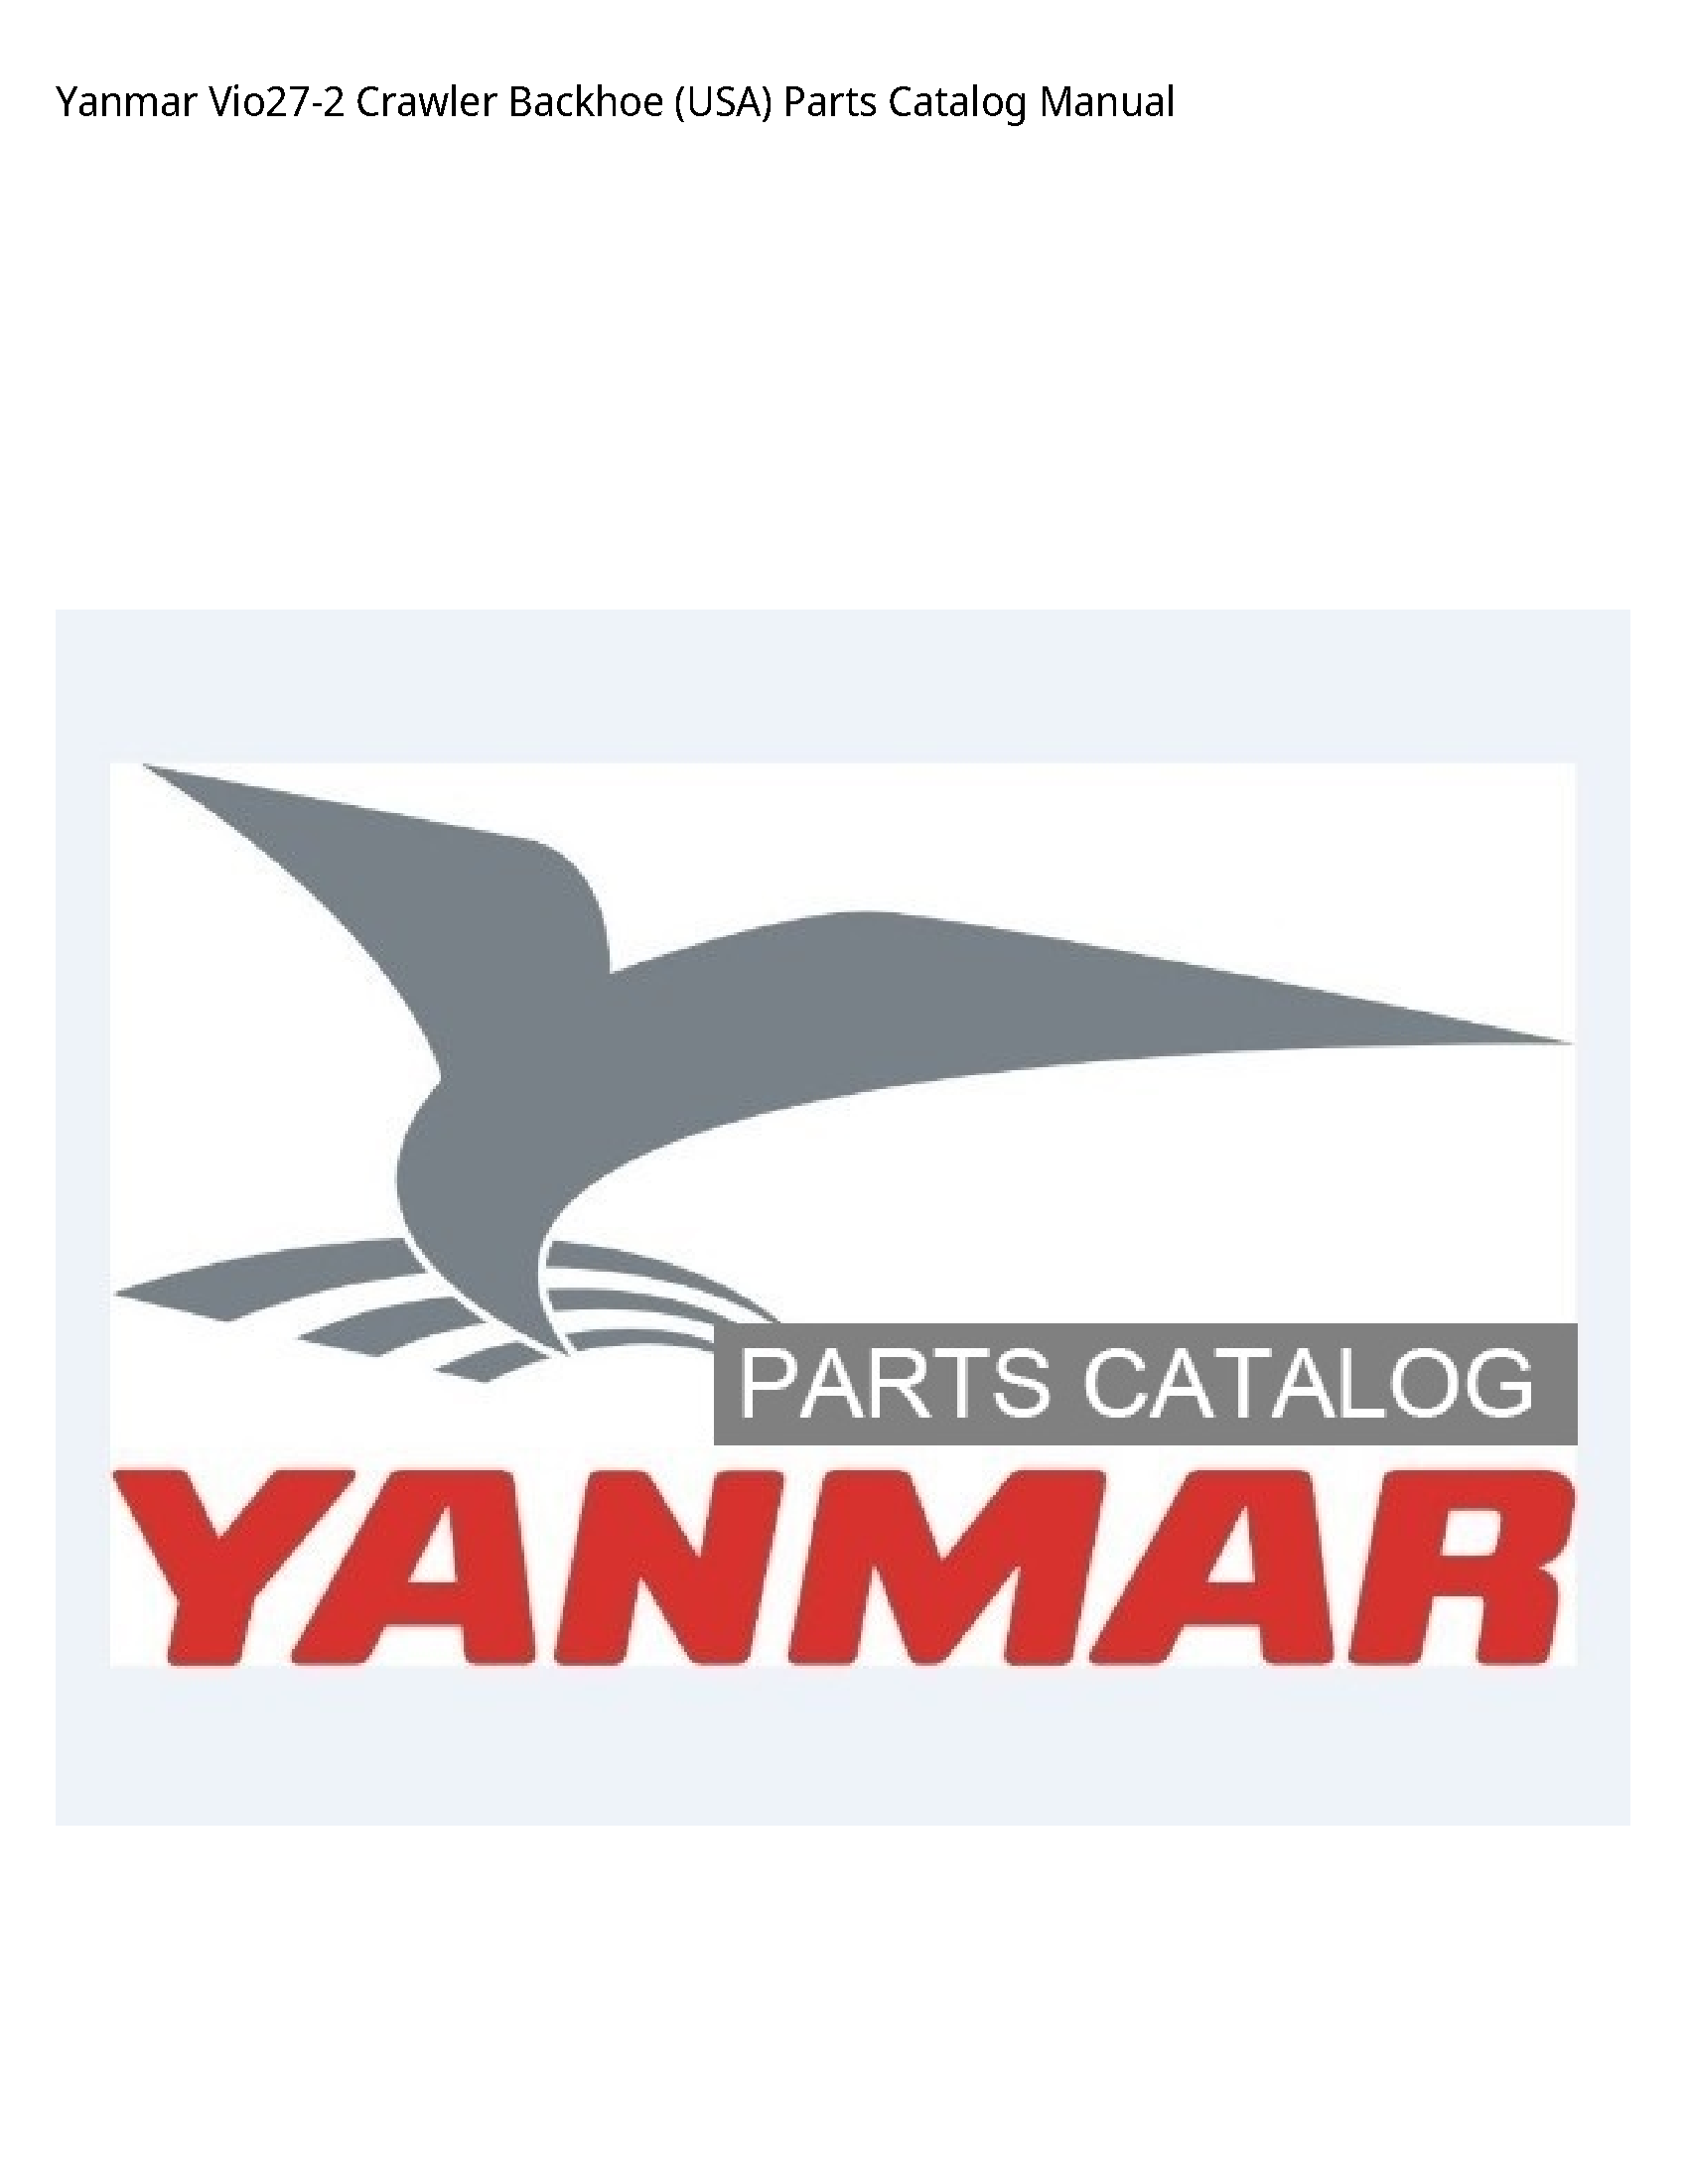 Yanmar Vio27-2 Crawler Backhoe (USA) Parts Catalog manual